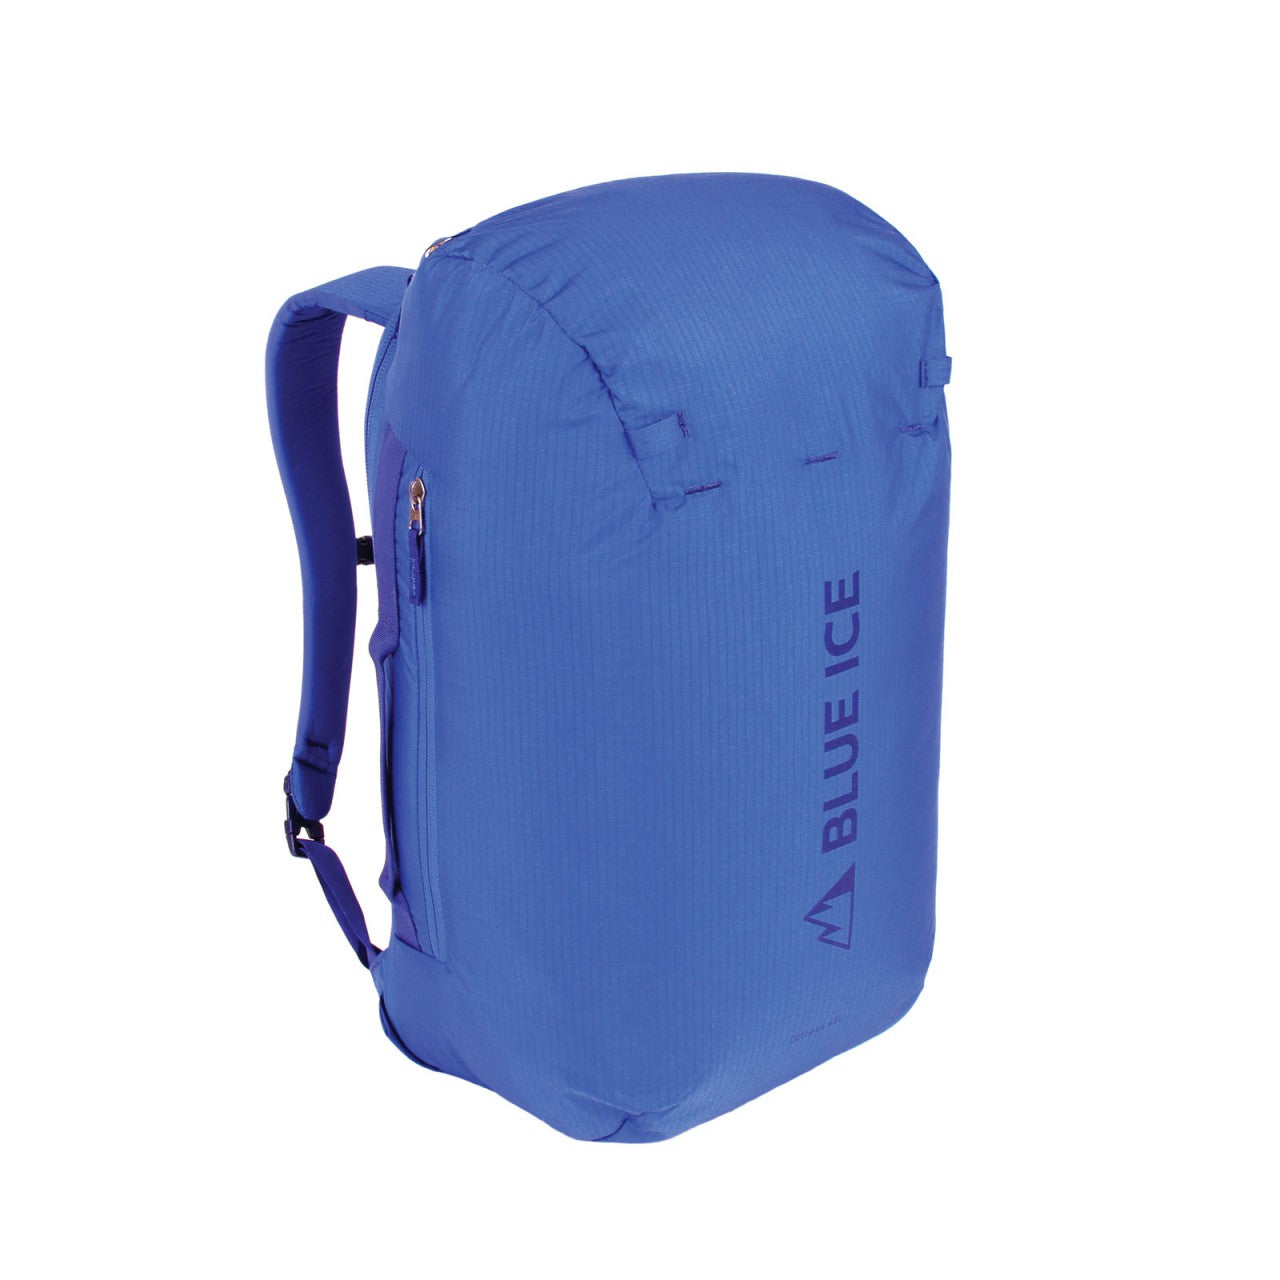 Octopus (45L) - turkish blue, climbing backpack